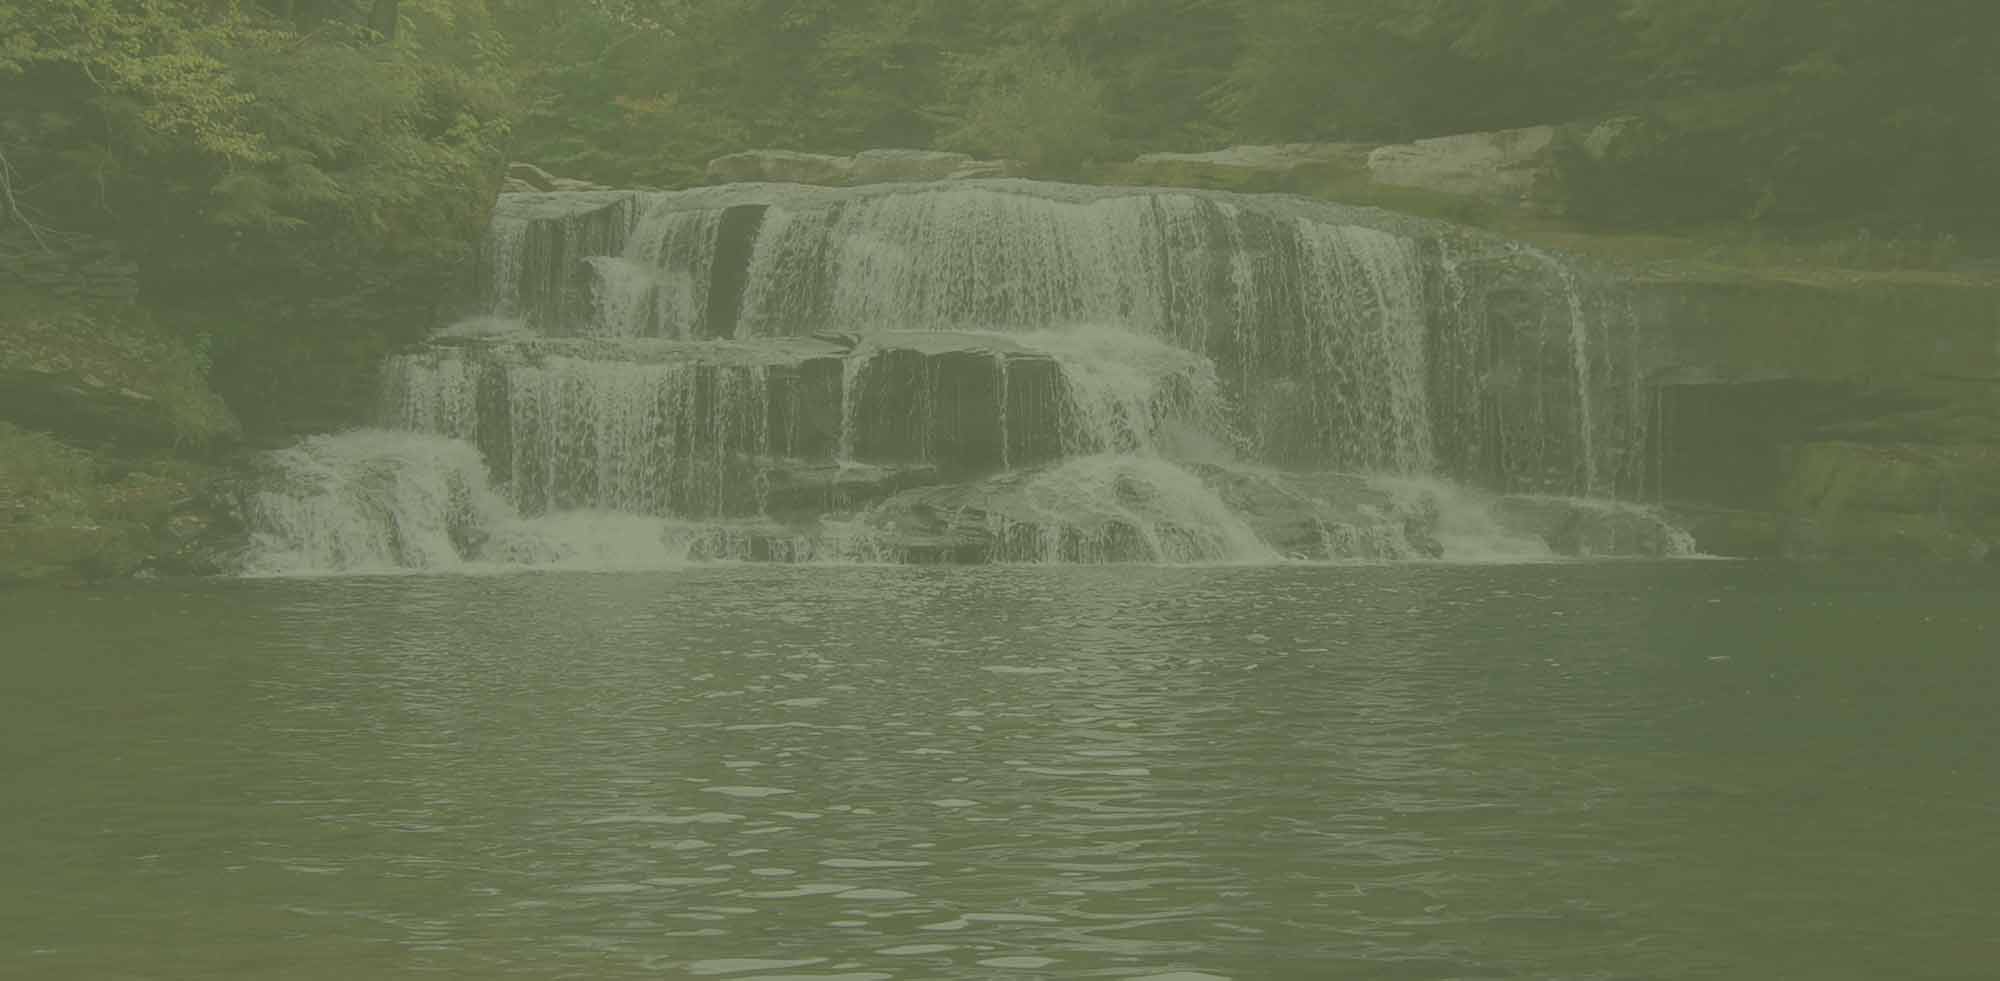 Waterfall in Catskills, Photo by Mike Hosier